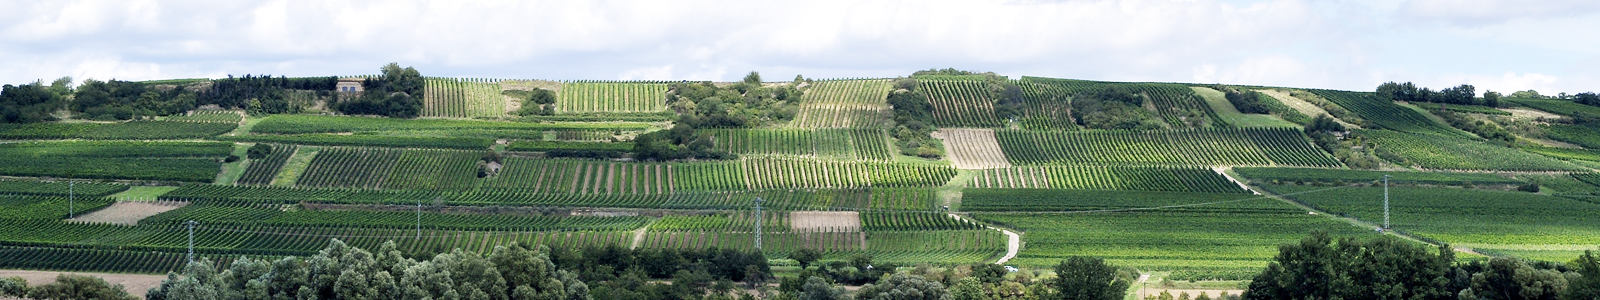 Großes Weinanbaugebiet ©Feuerbach